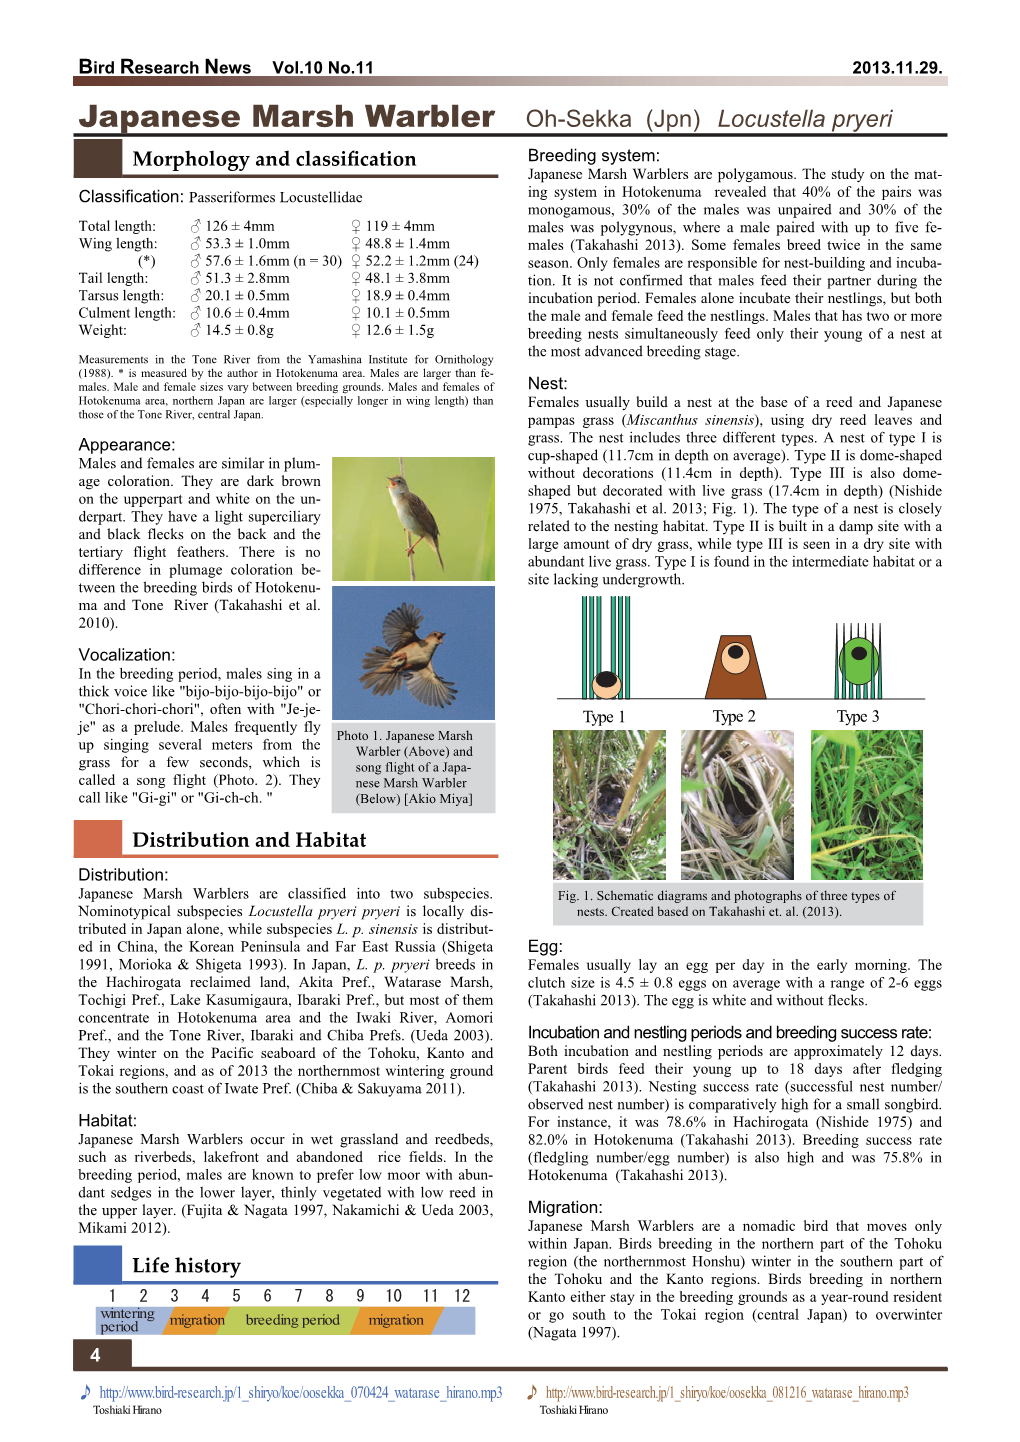 Japanese Marsh Warbler Oh-Sekka (Jpn) Locustella Pryeri Morphology and Classiﬁcation Breeding System: Japanese Marsh Warblers Are Polygamous